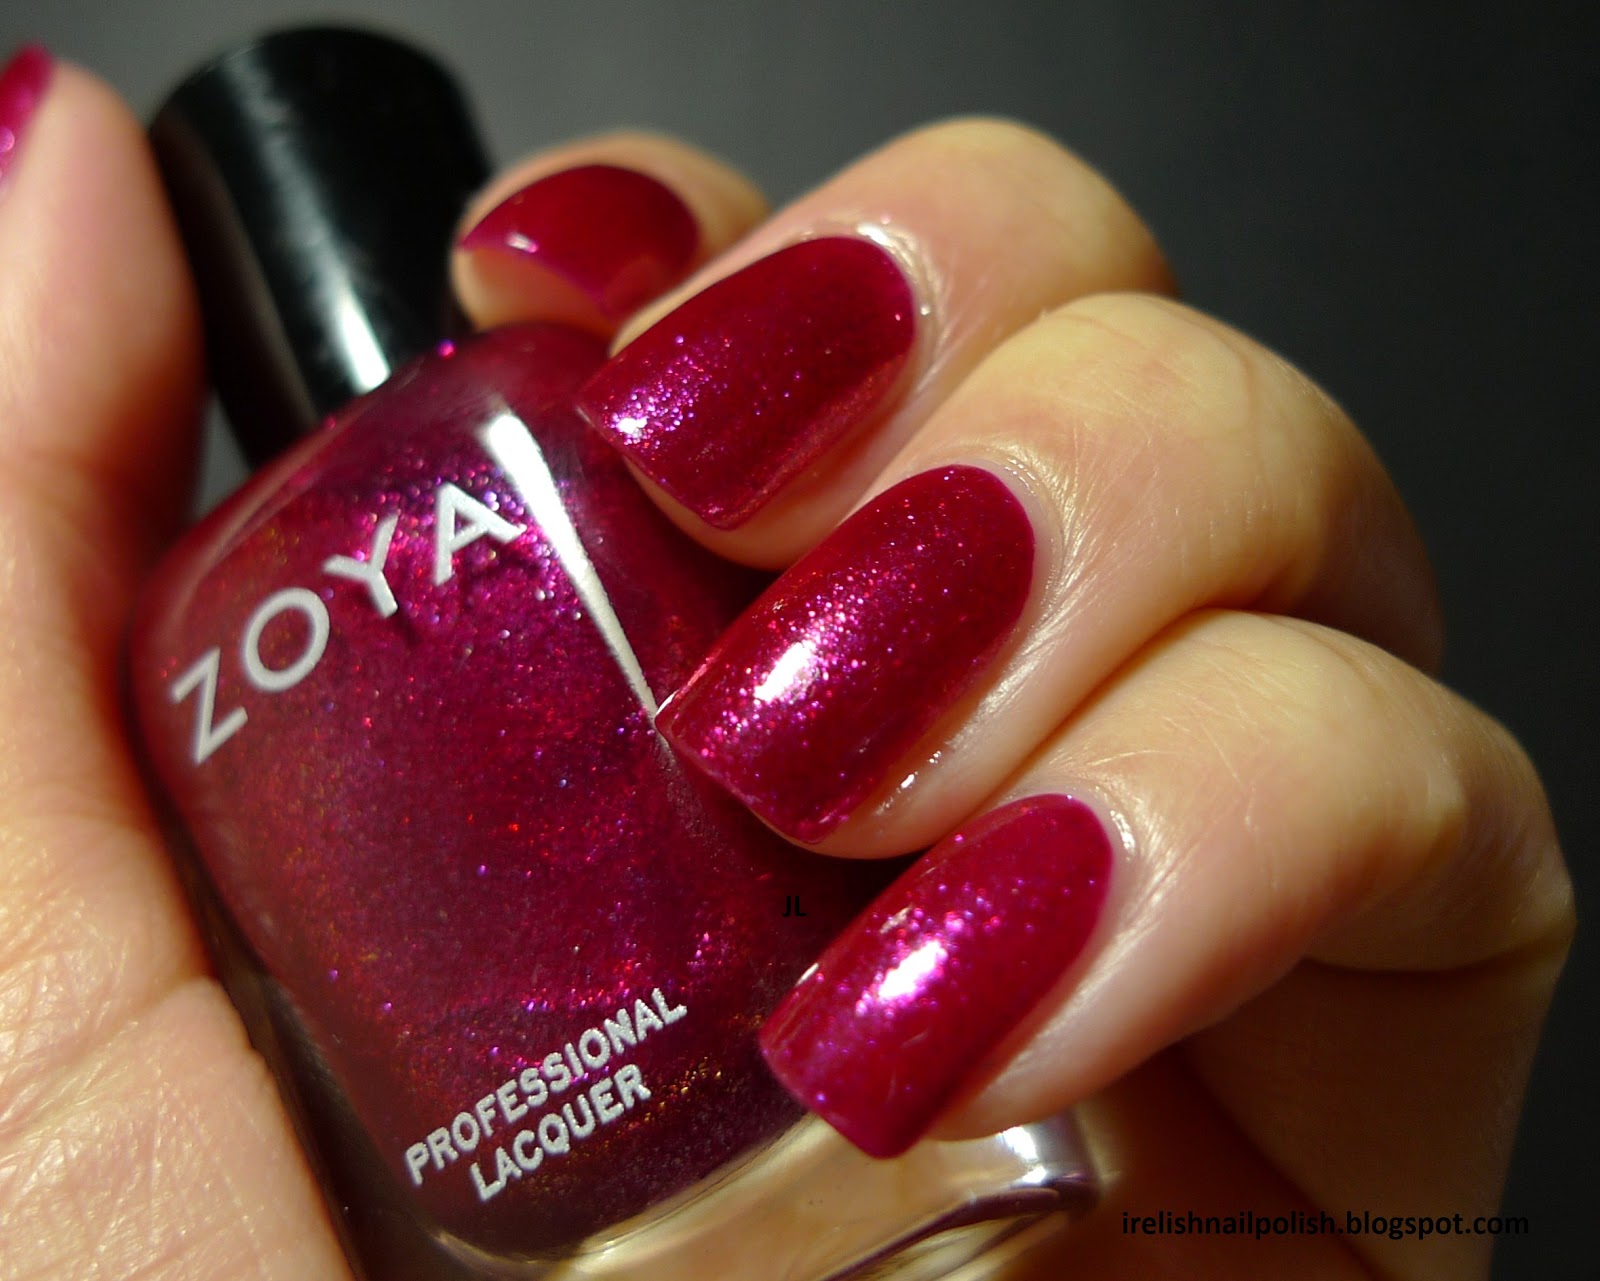 6. "Pink Cashmere" Nail Polish by Zoya - wide 3